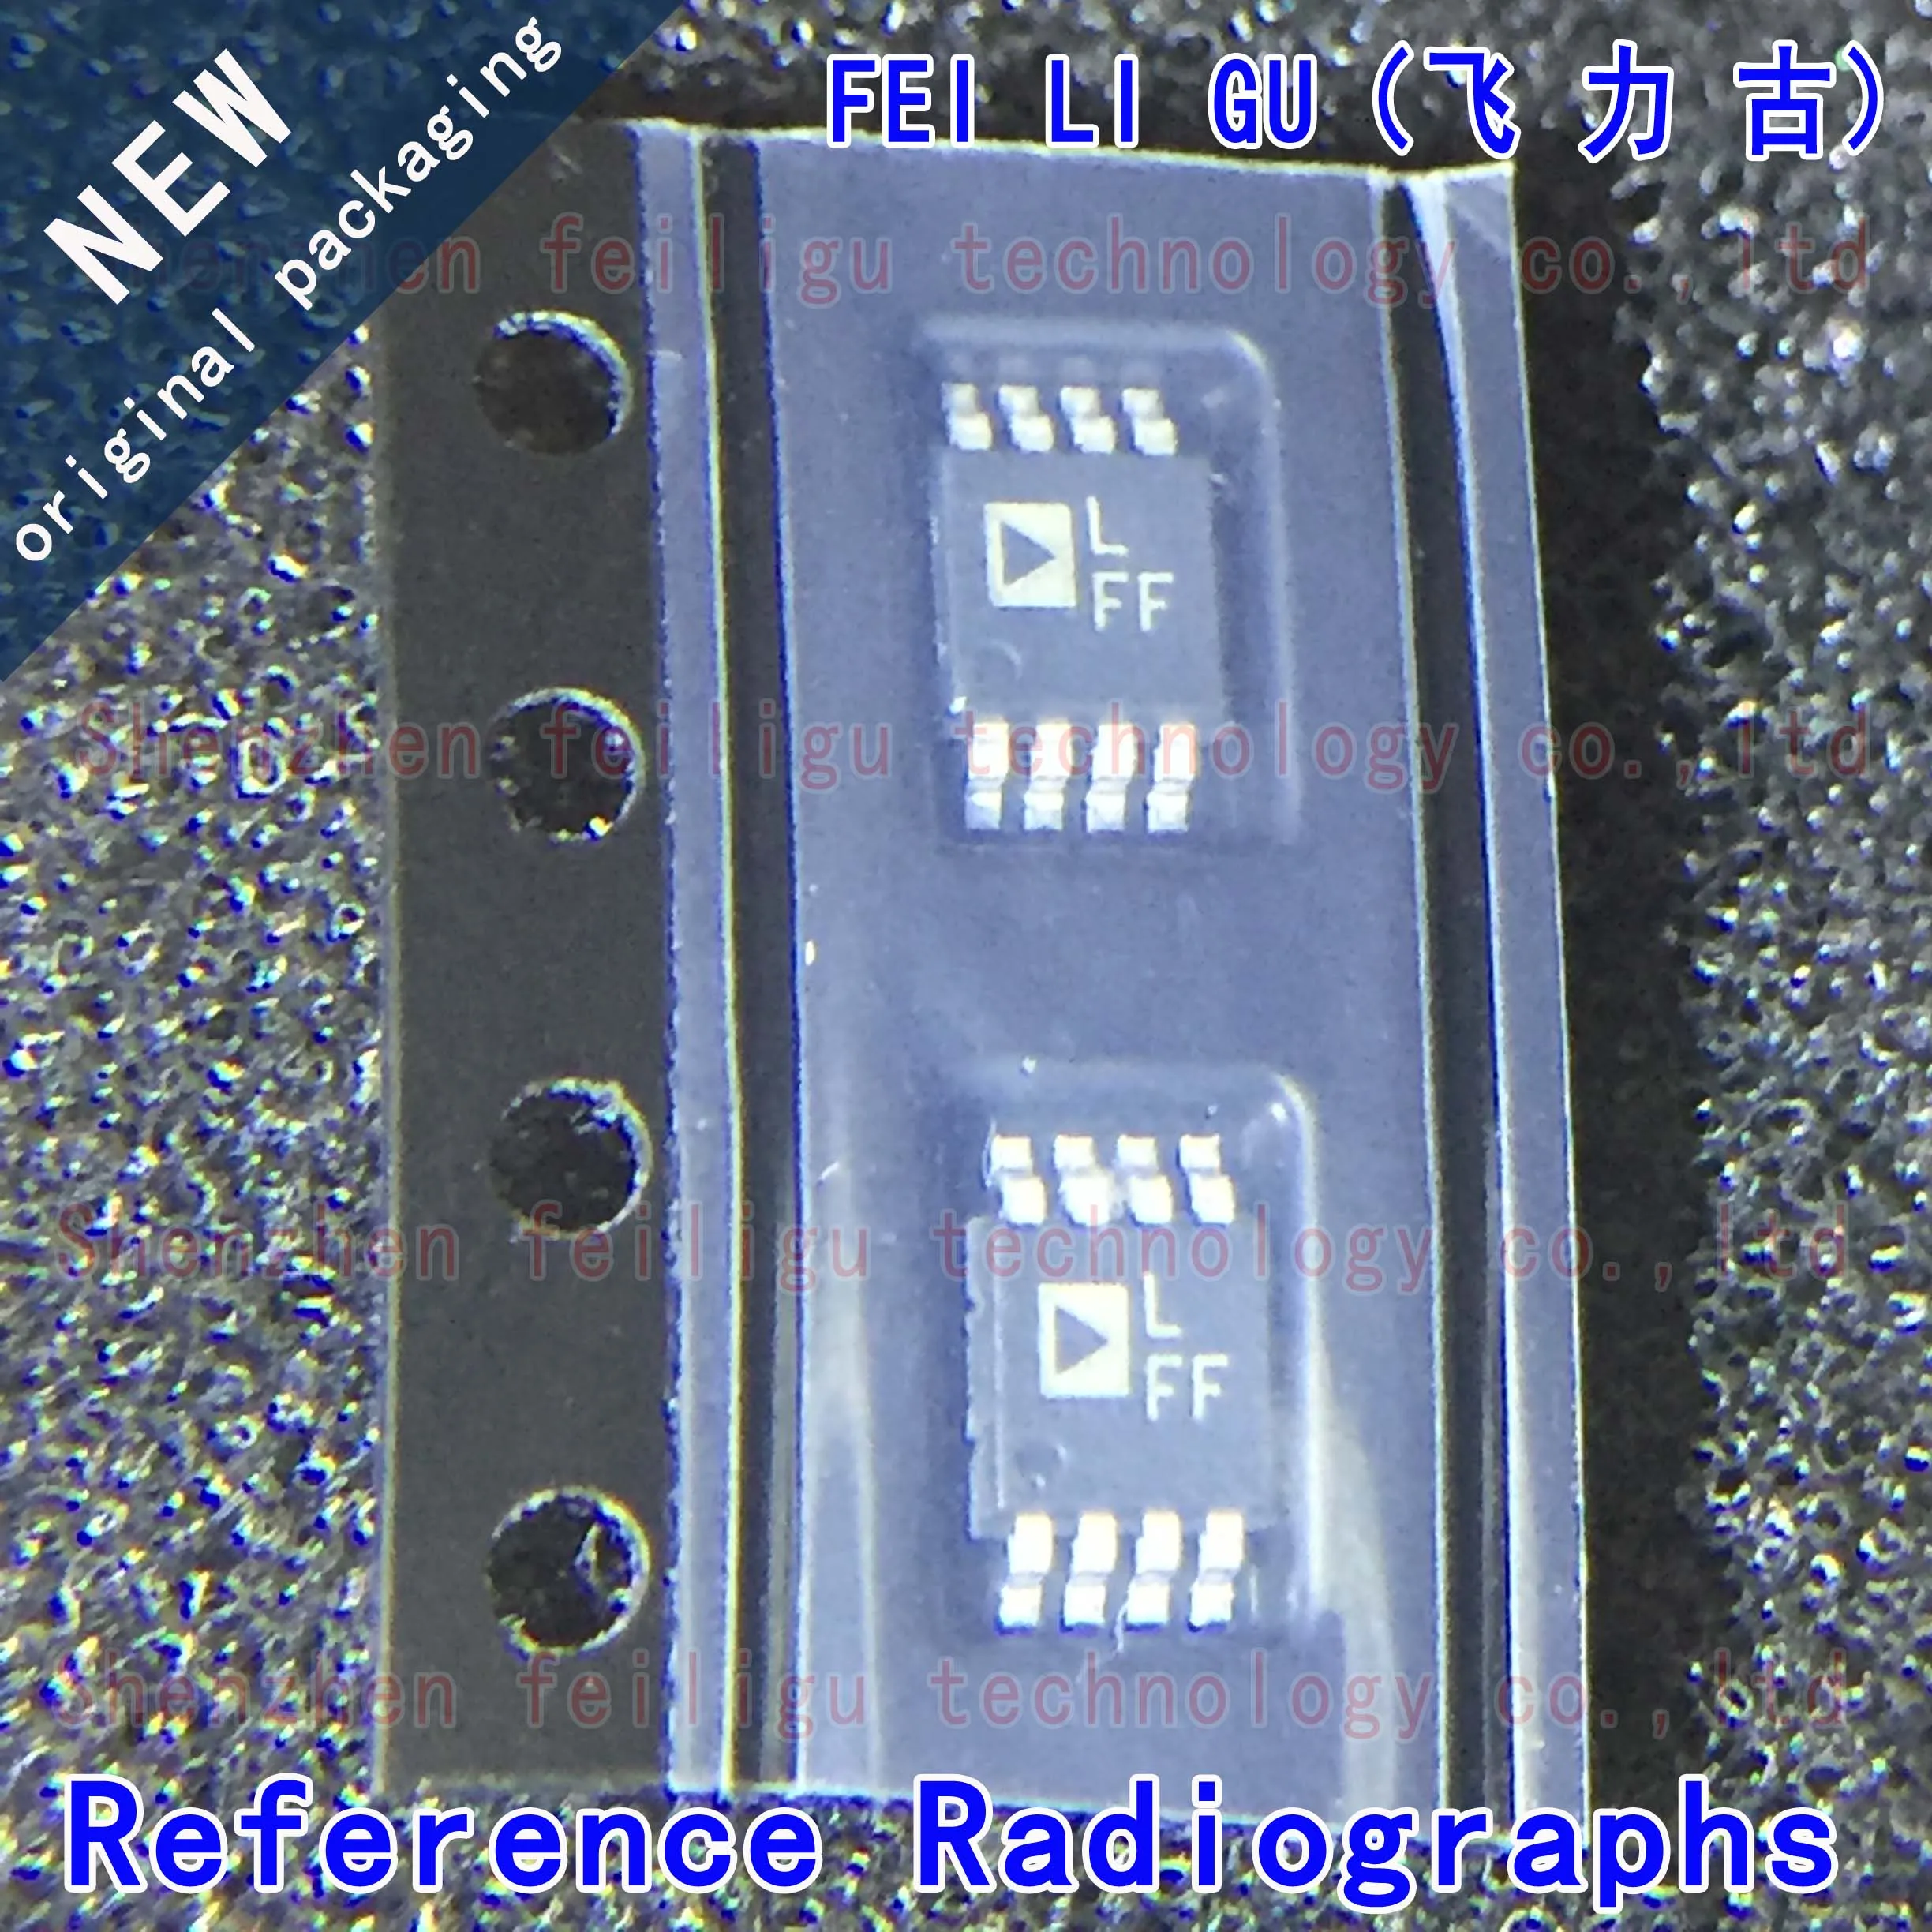 1~30PCS 100% New original ADP3335ARMZ-5-R7 ADP3335ARMZ-5 ADP3335ARMZ ADP3335 silkscreen:LFF package:MSOP8 linear regulator chip 1 30pcs 100% new original adp3335armz 5 r7 adp3335armz 5 adp3335armz adp3335 silkscreen lff package msop8 linear regulator chip